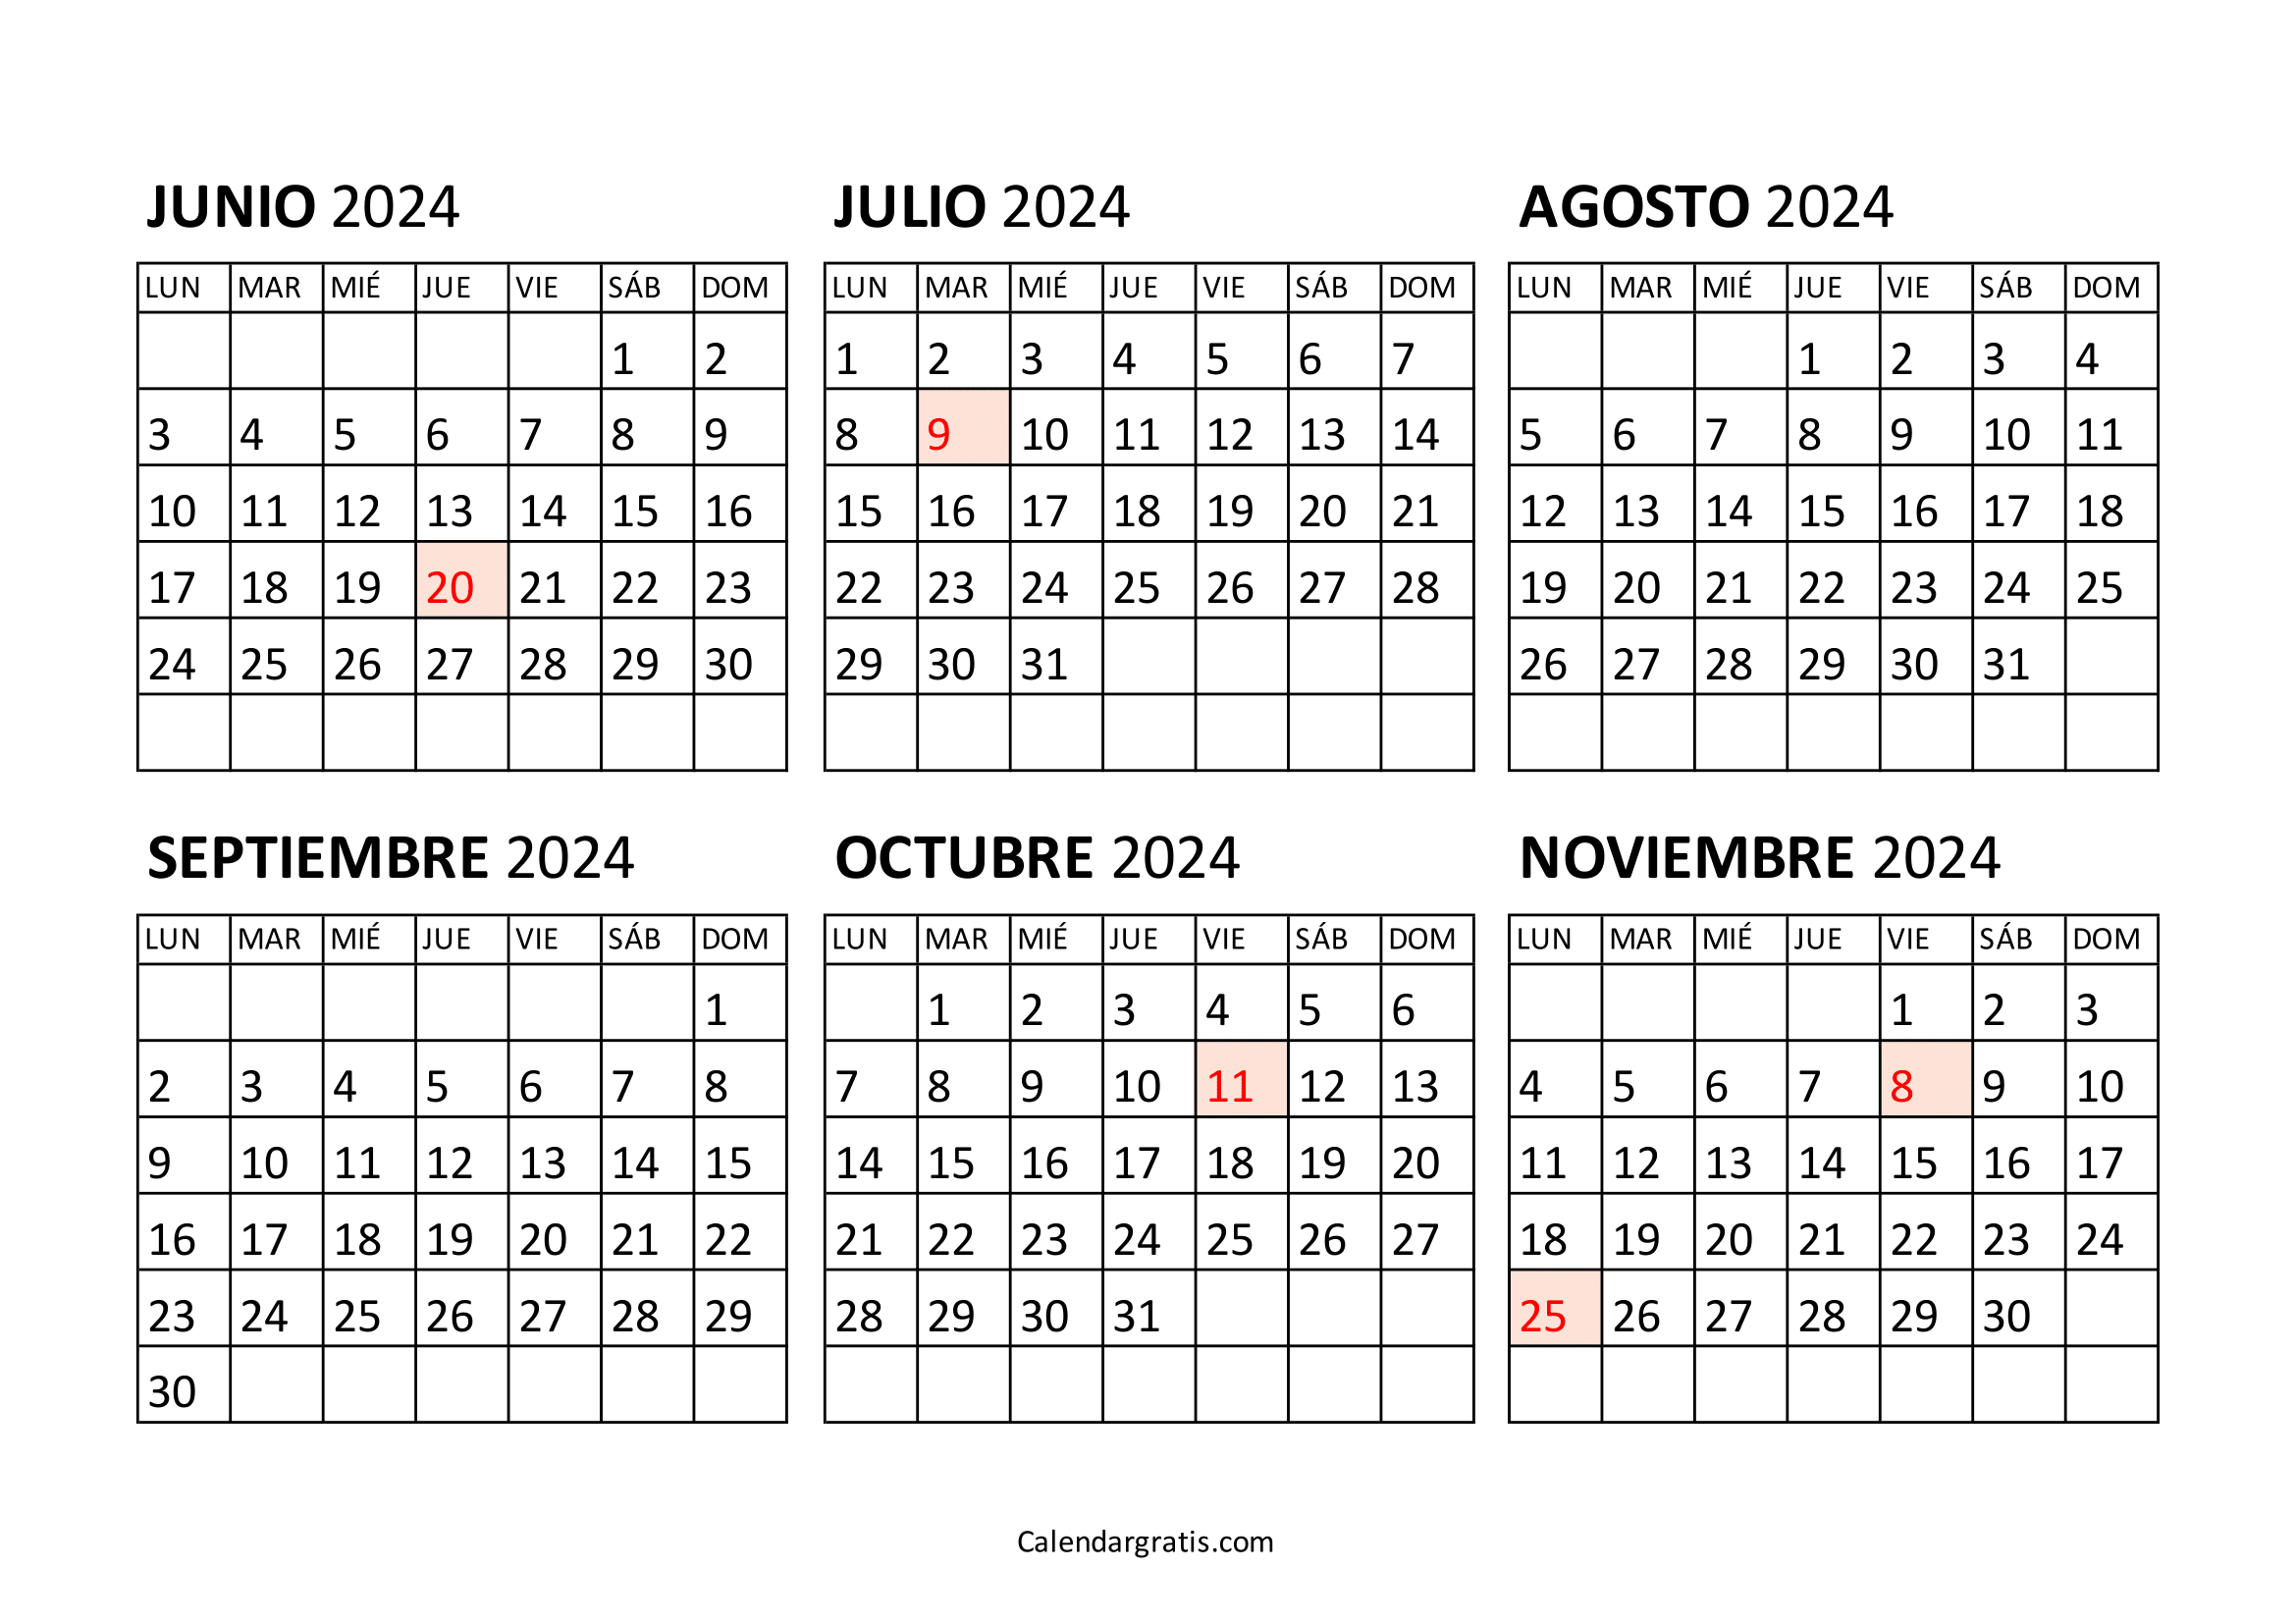 Calendario junio a noviembre 2024 Argentina